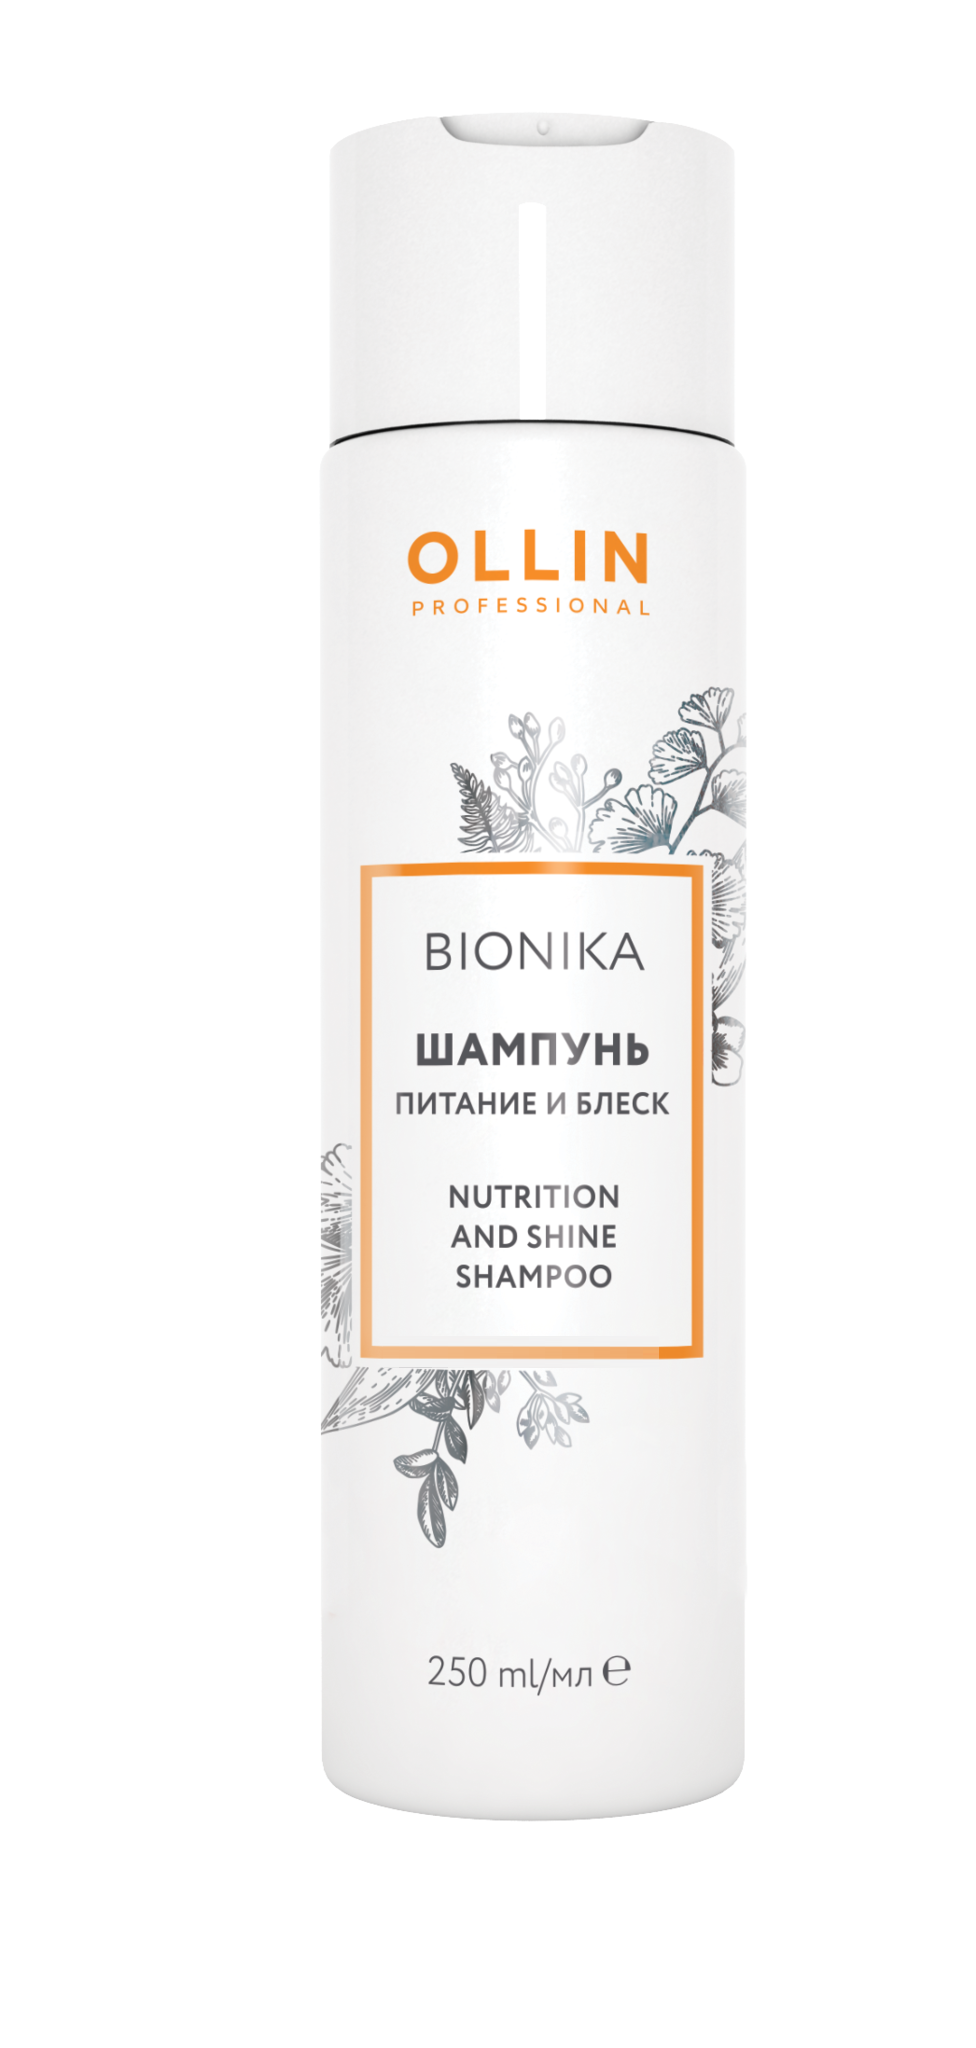 Ollin bionika шампунь питание и блеск 250мл SALE -25%